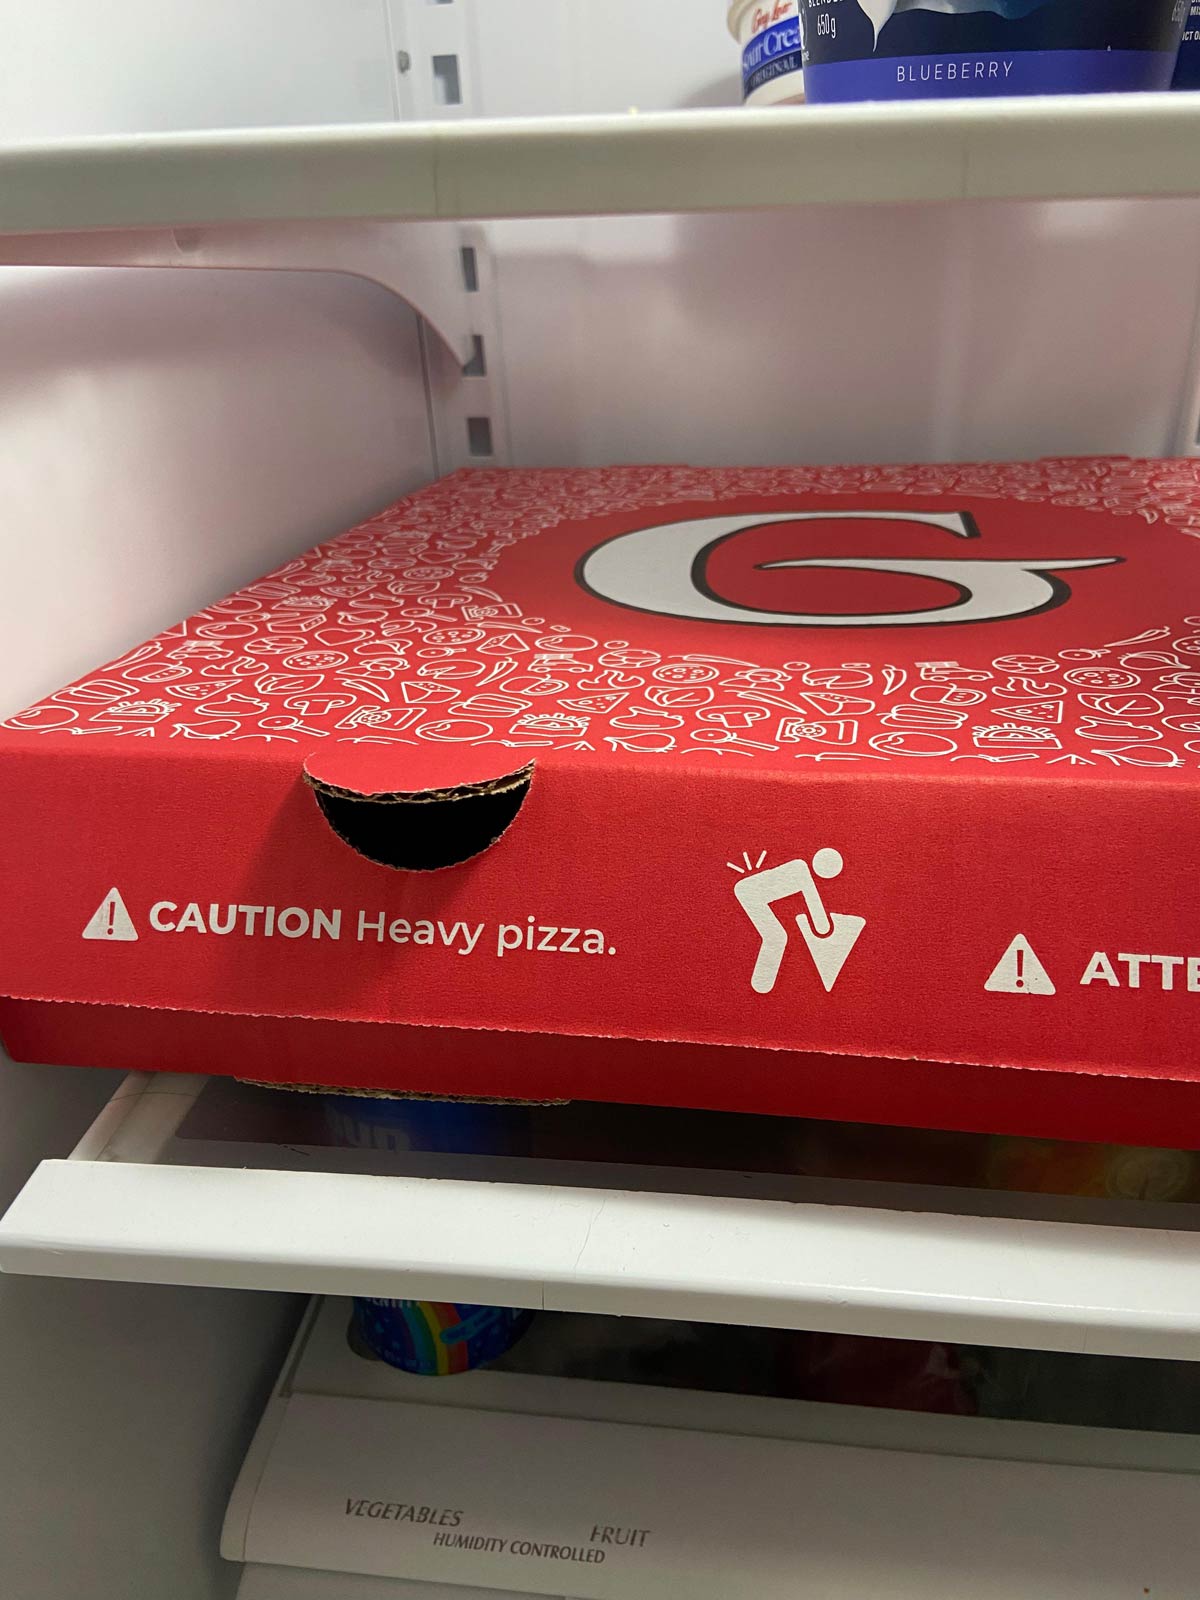 Pizza box has a warning